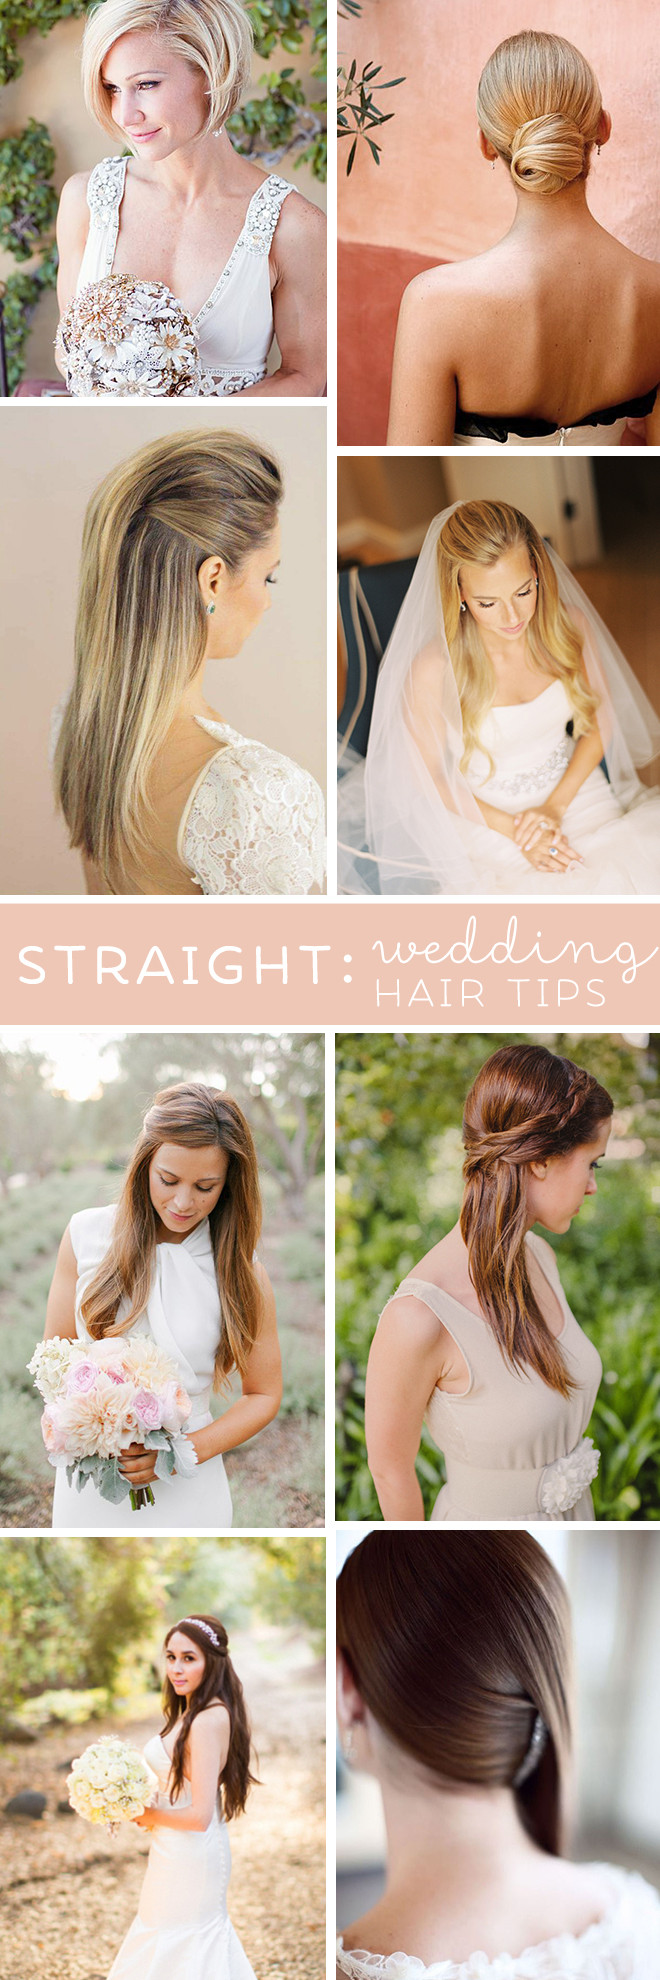 Straight Hairstyles For Weddings
 Best Wedding Hair Tips For Wearing Straight Styles